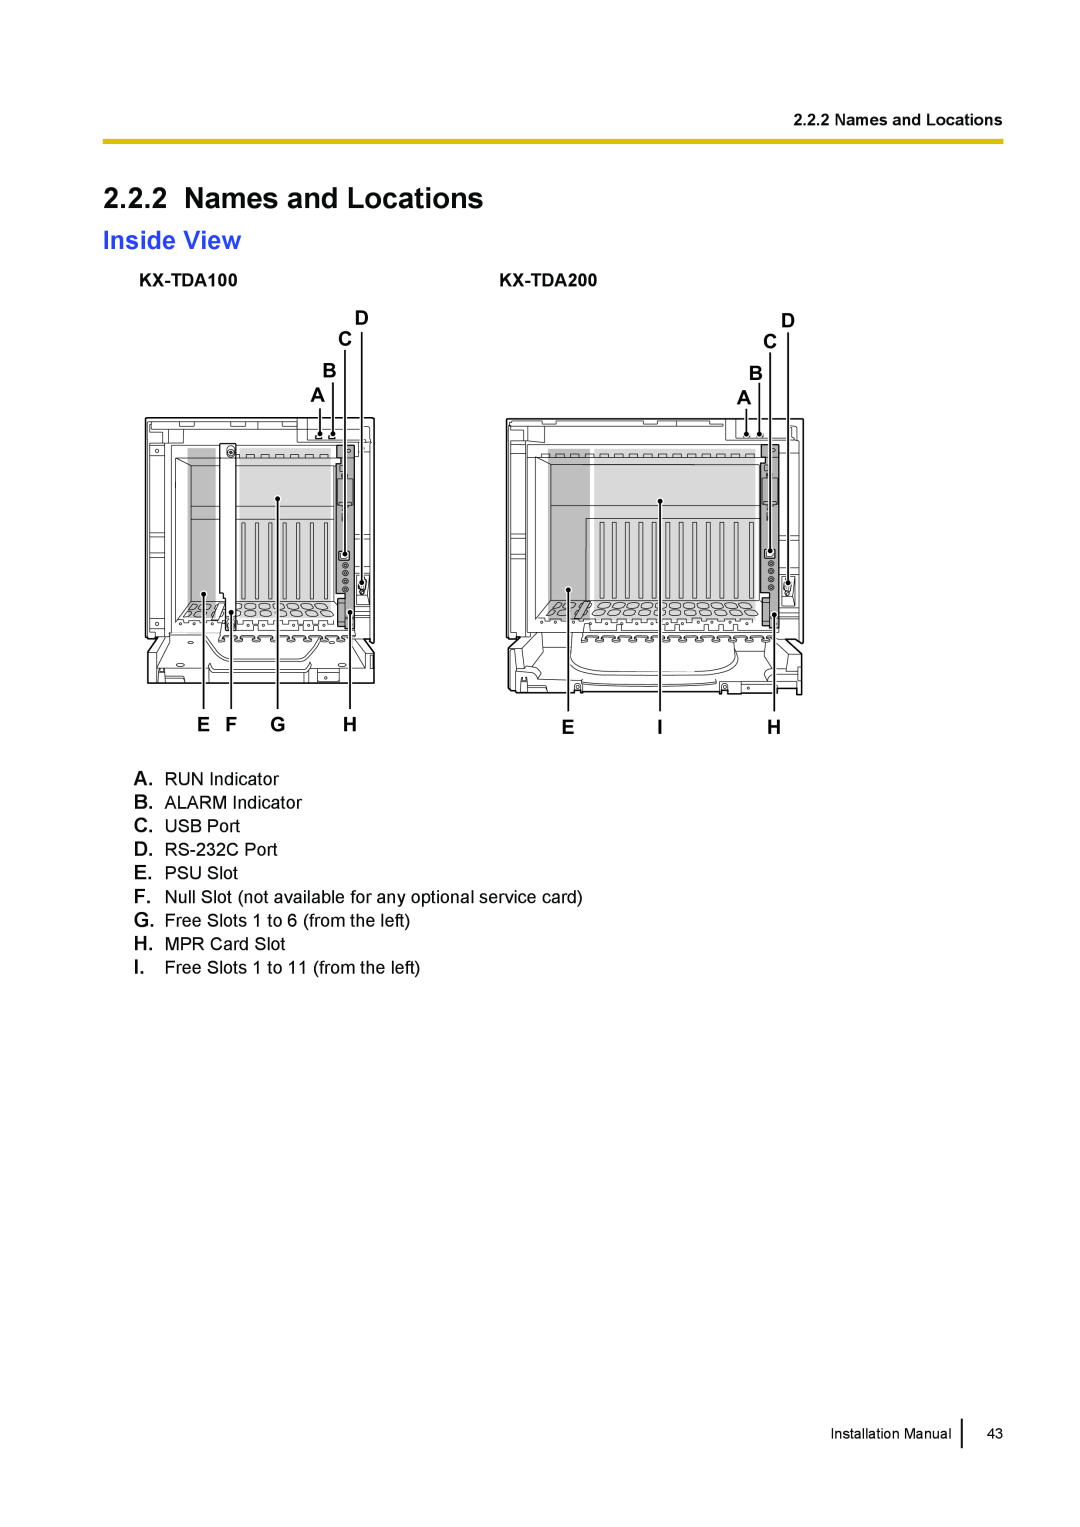 Panasonic KX-TDA100 installation manual Names and Locations, Inside View, E F G He I H, KX-TDA200 